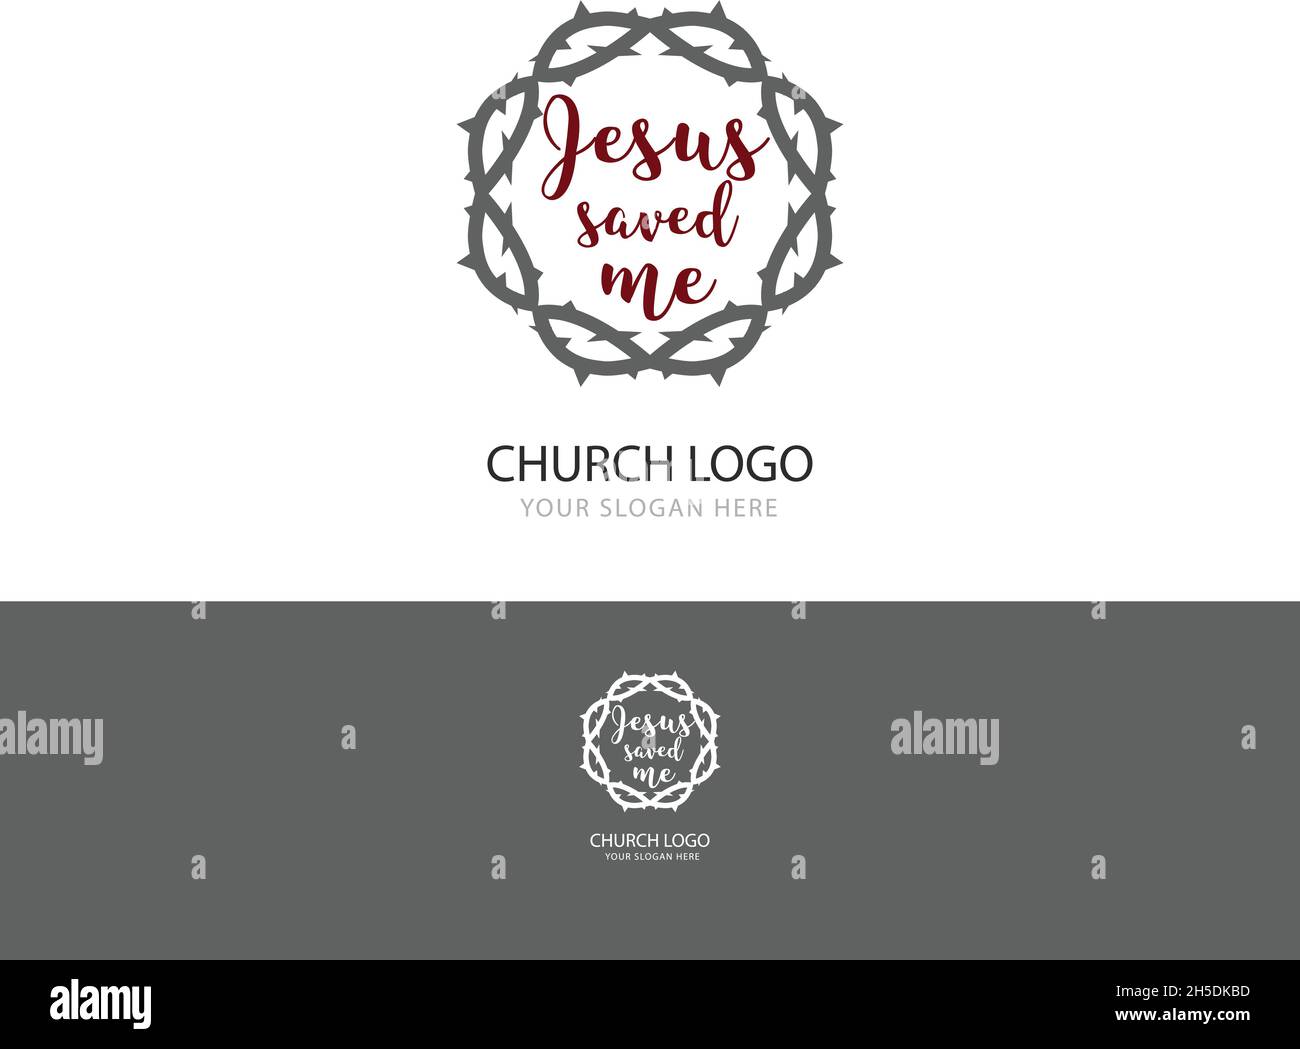 Church logo. Christian symbols. Stock Vector